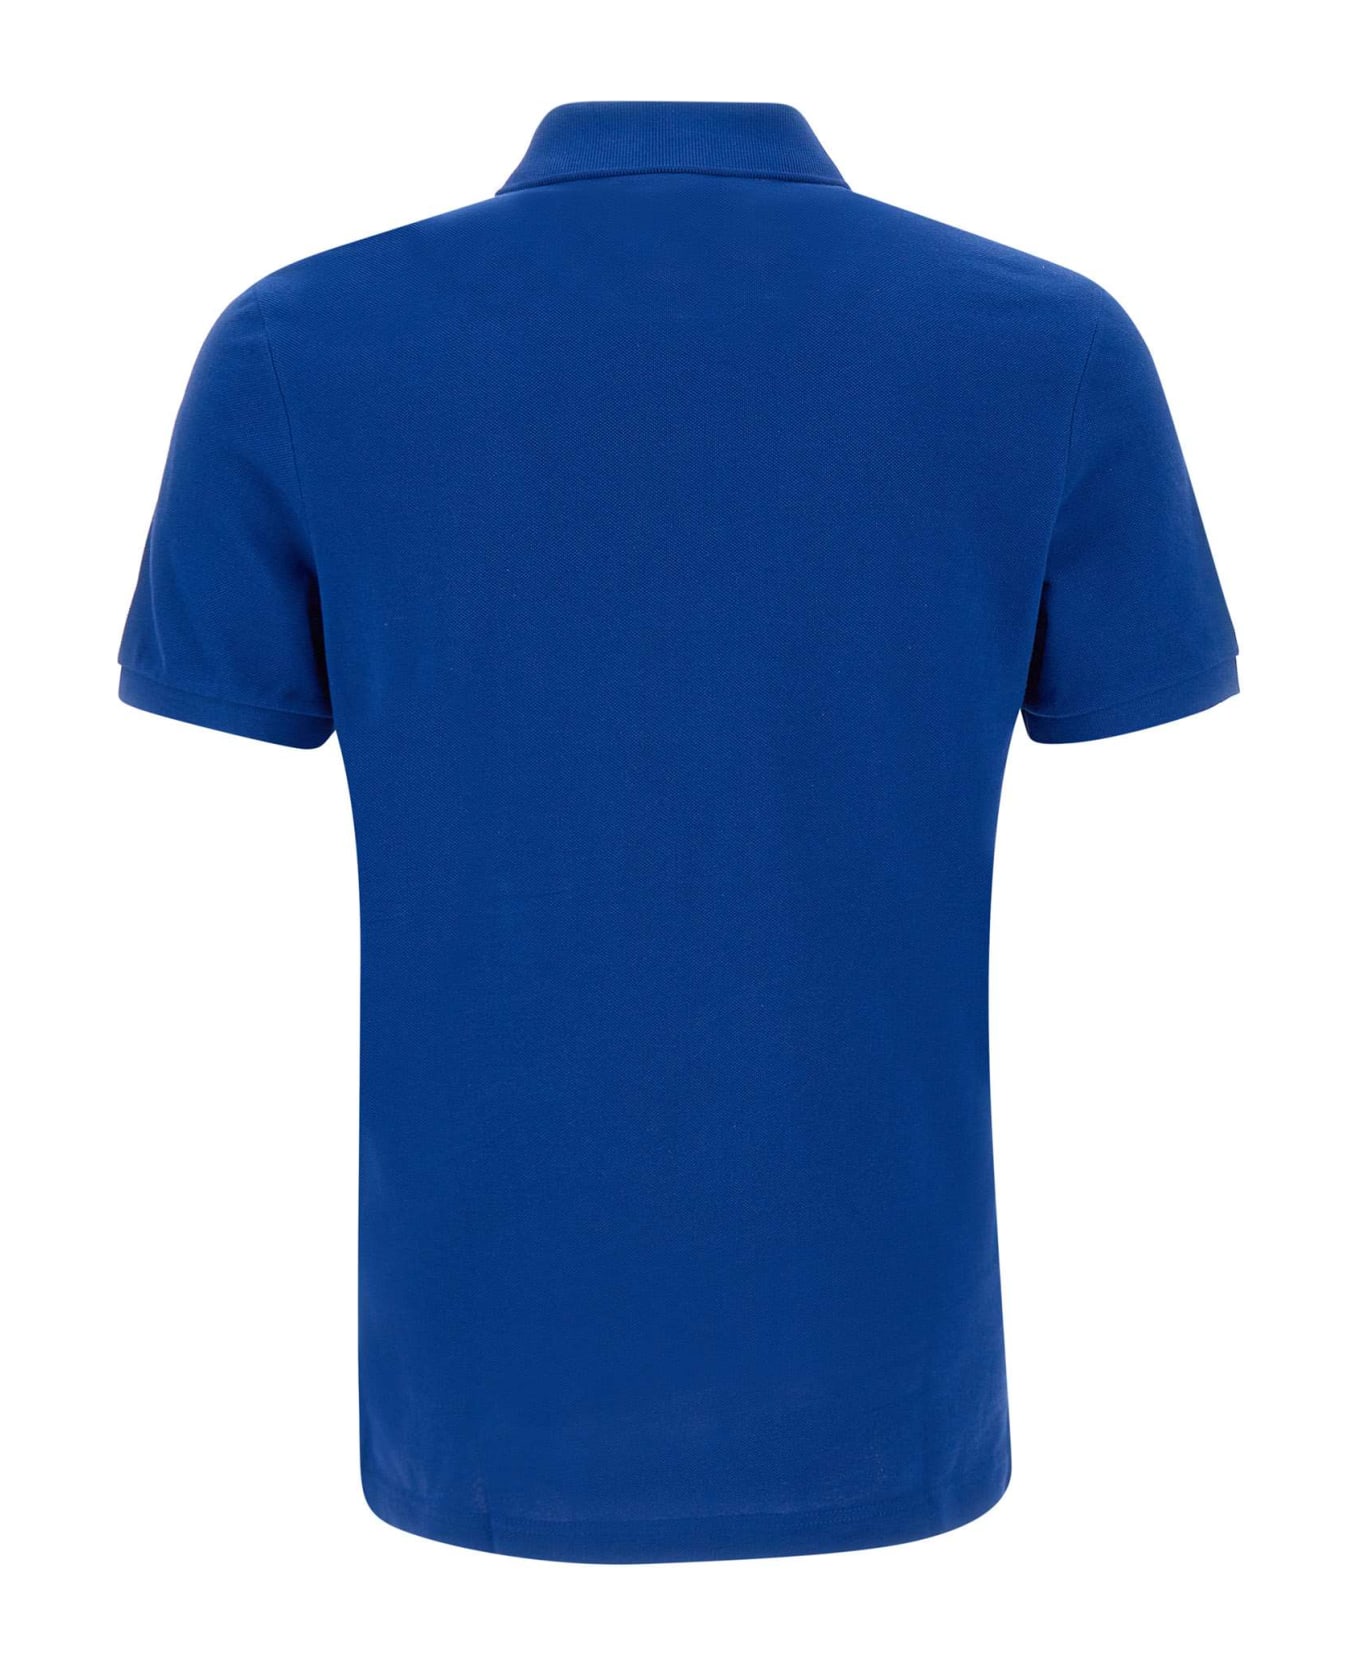 Lacoste Piquet Cotton Polo Shirt - BLUE